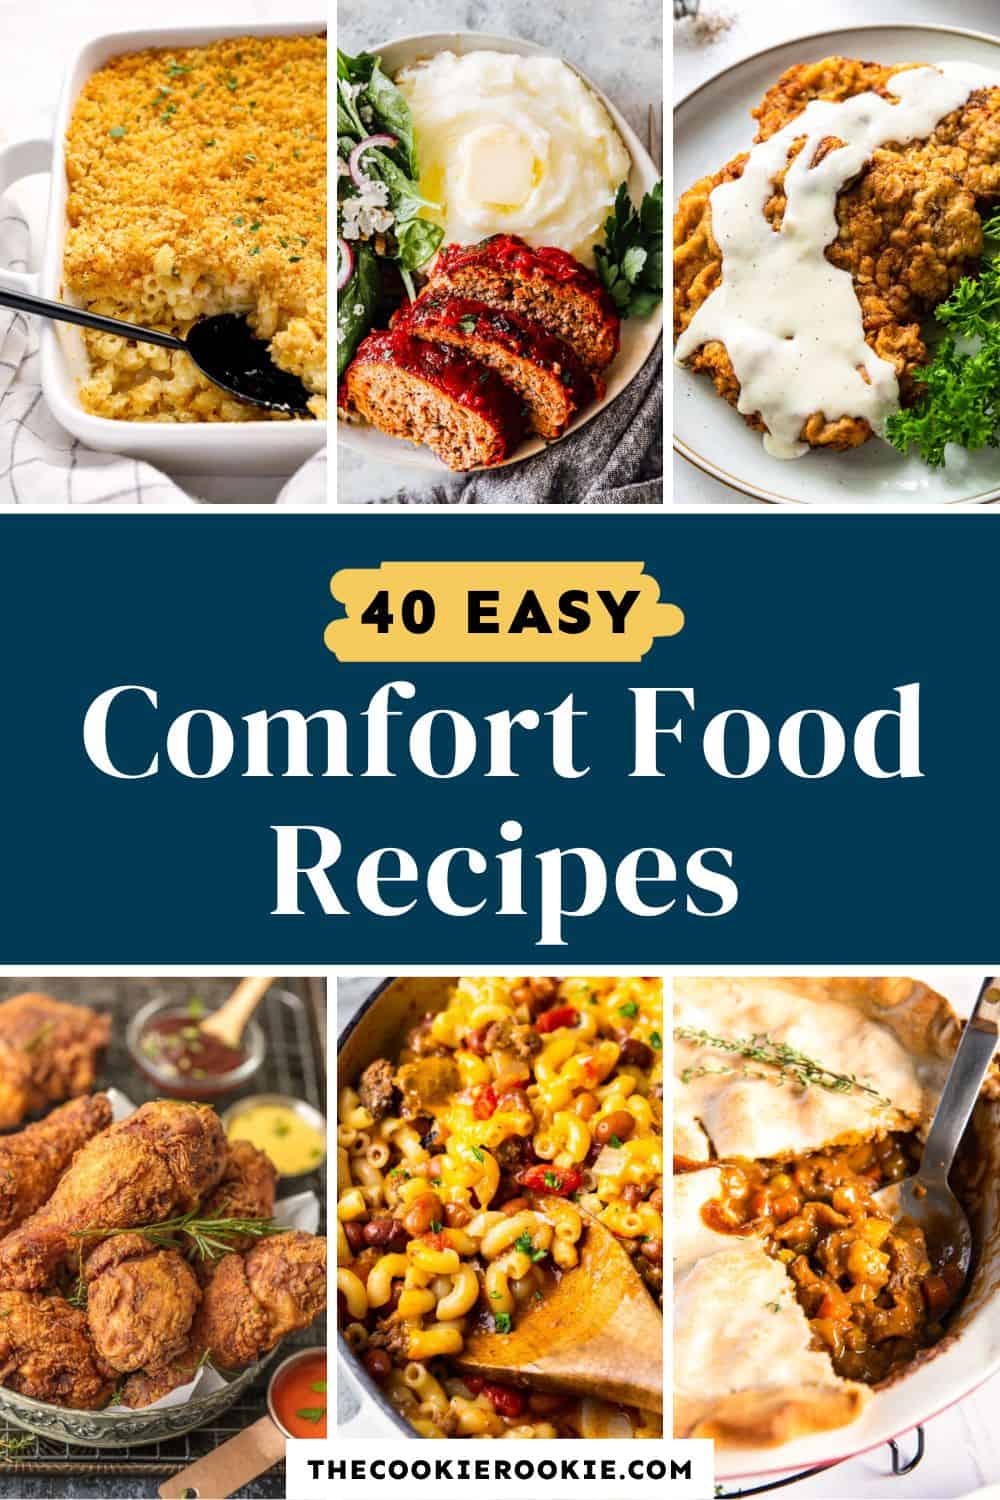 40 easy comfort food recipes Pinterest